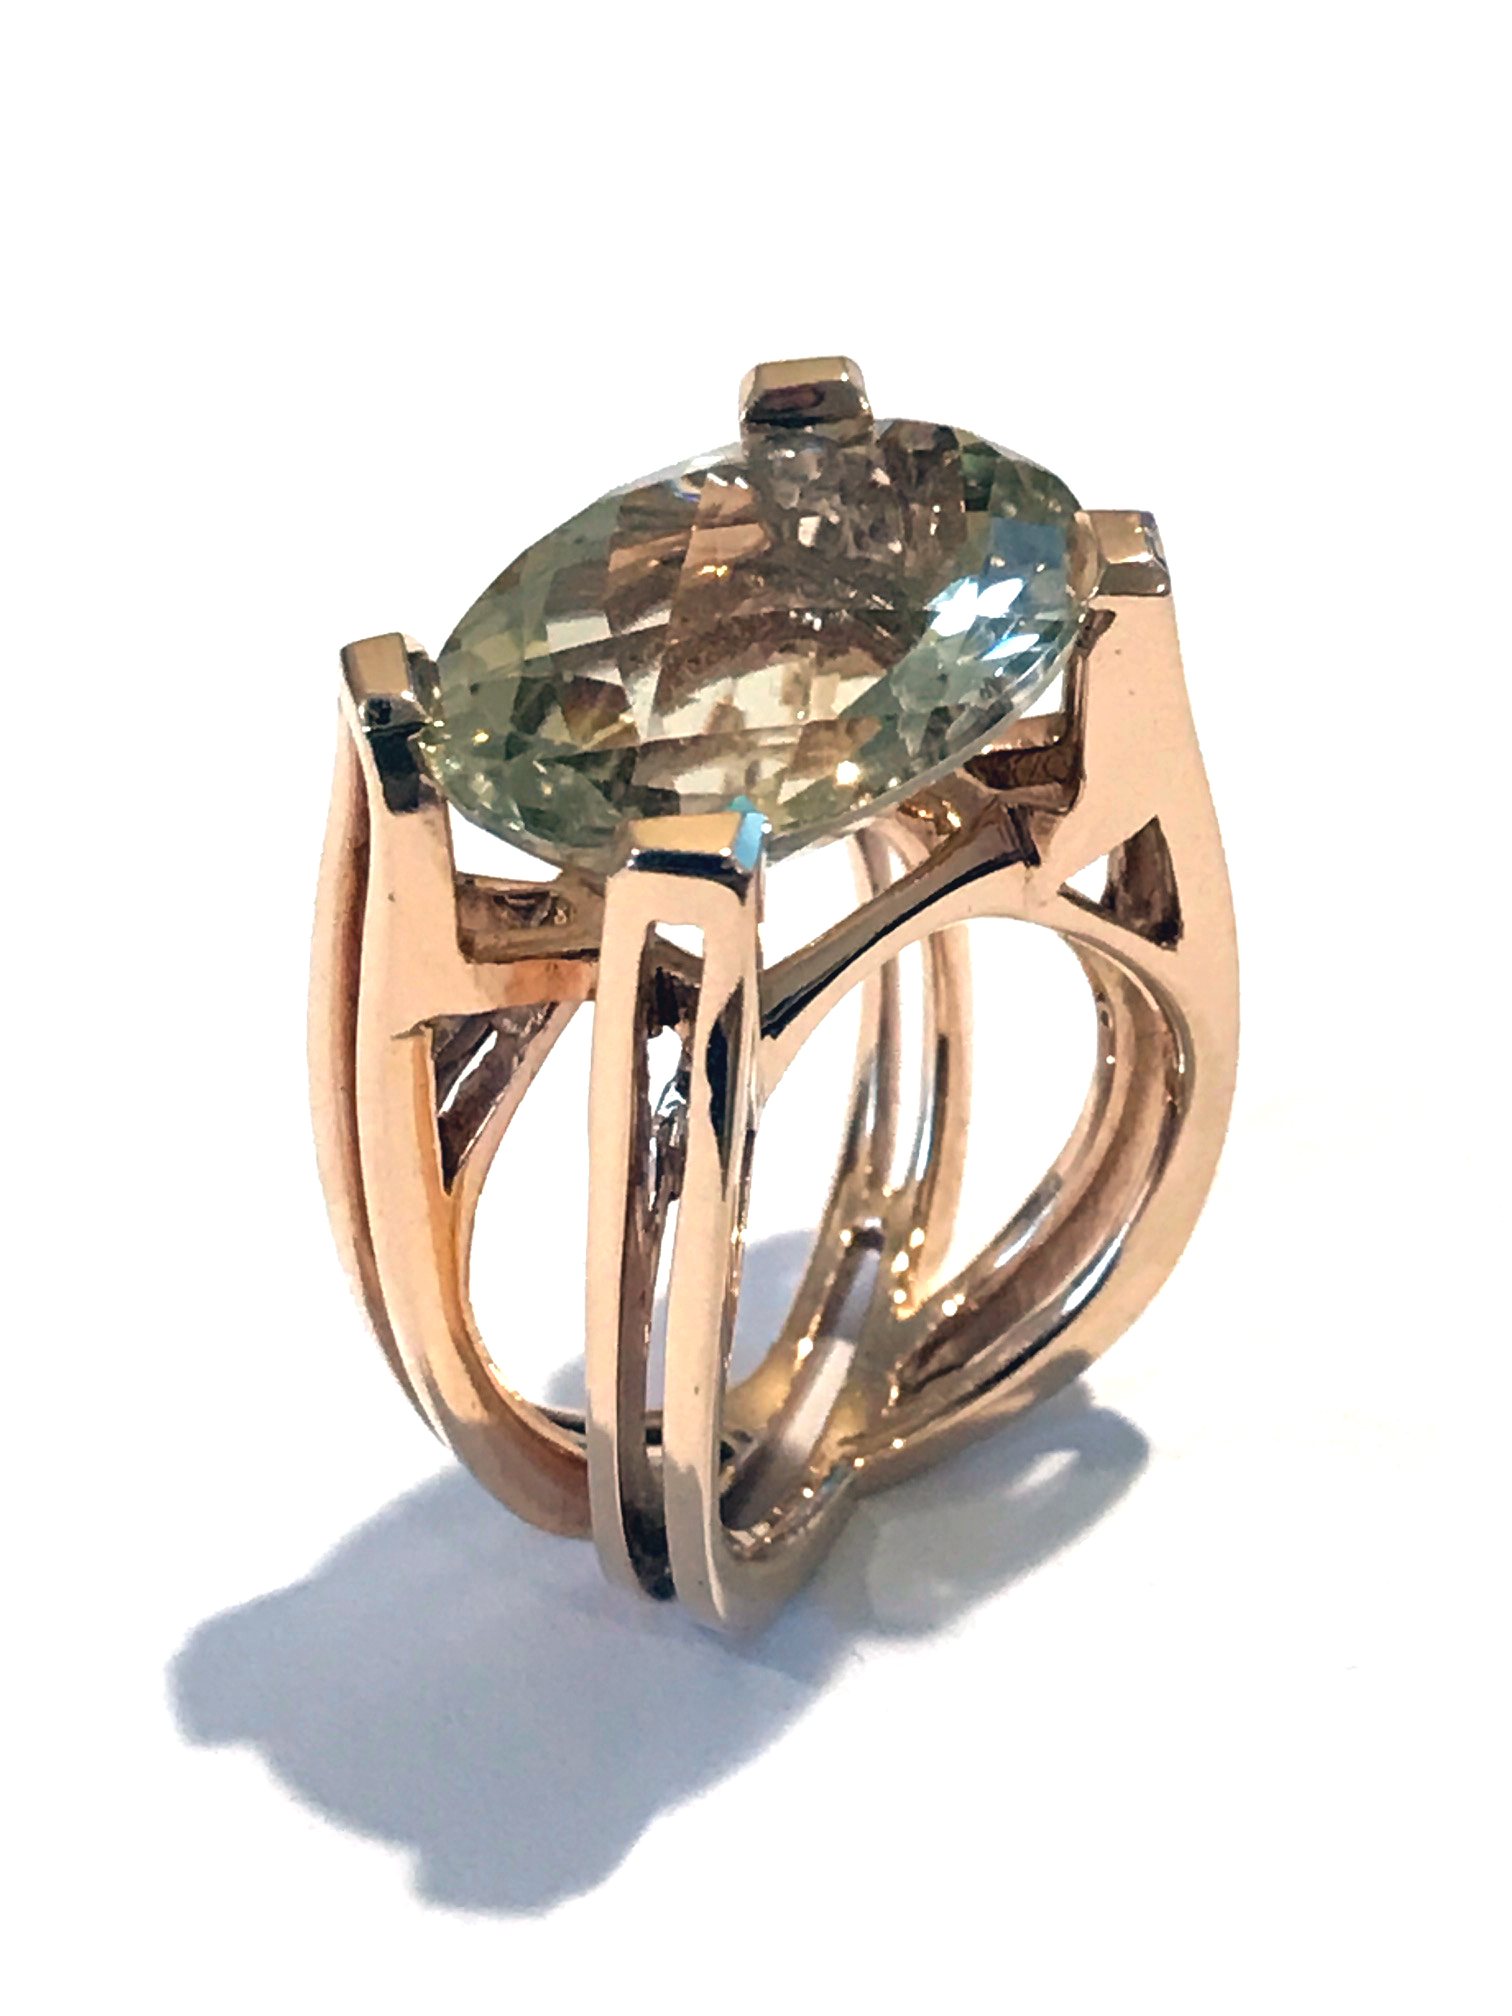 RING 0623 - Beryl in 18k Rose Gold - Michael Alexander Jewelry